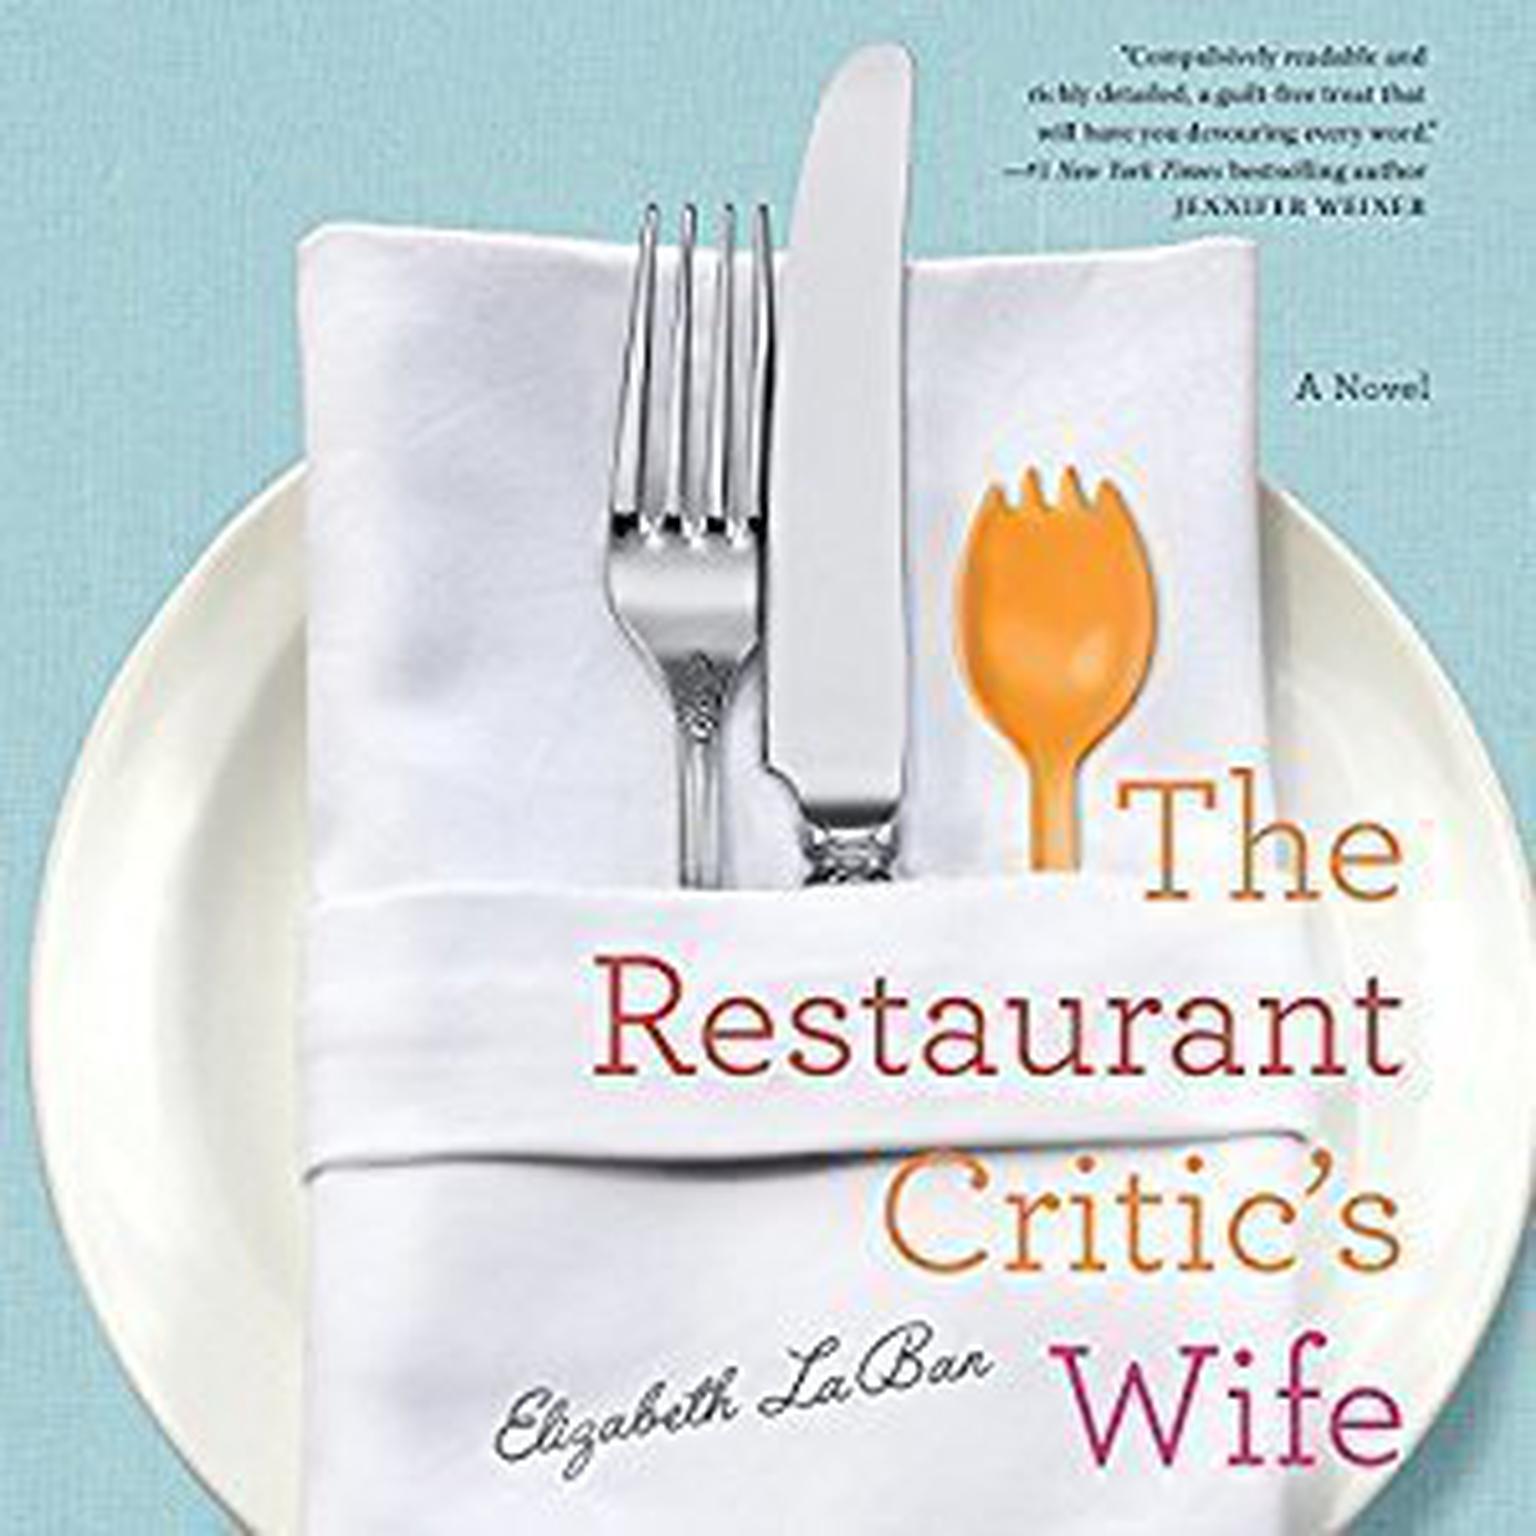 The Restaurant Critics Wife Audiobook, by Elizabeth LaBan